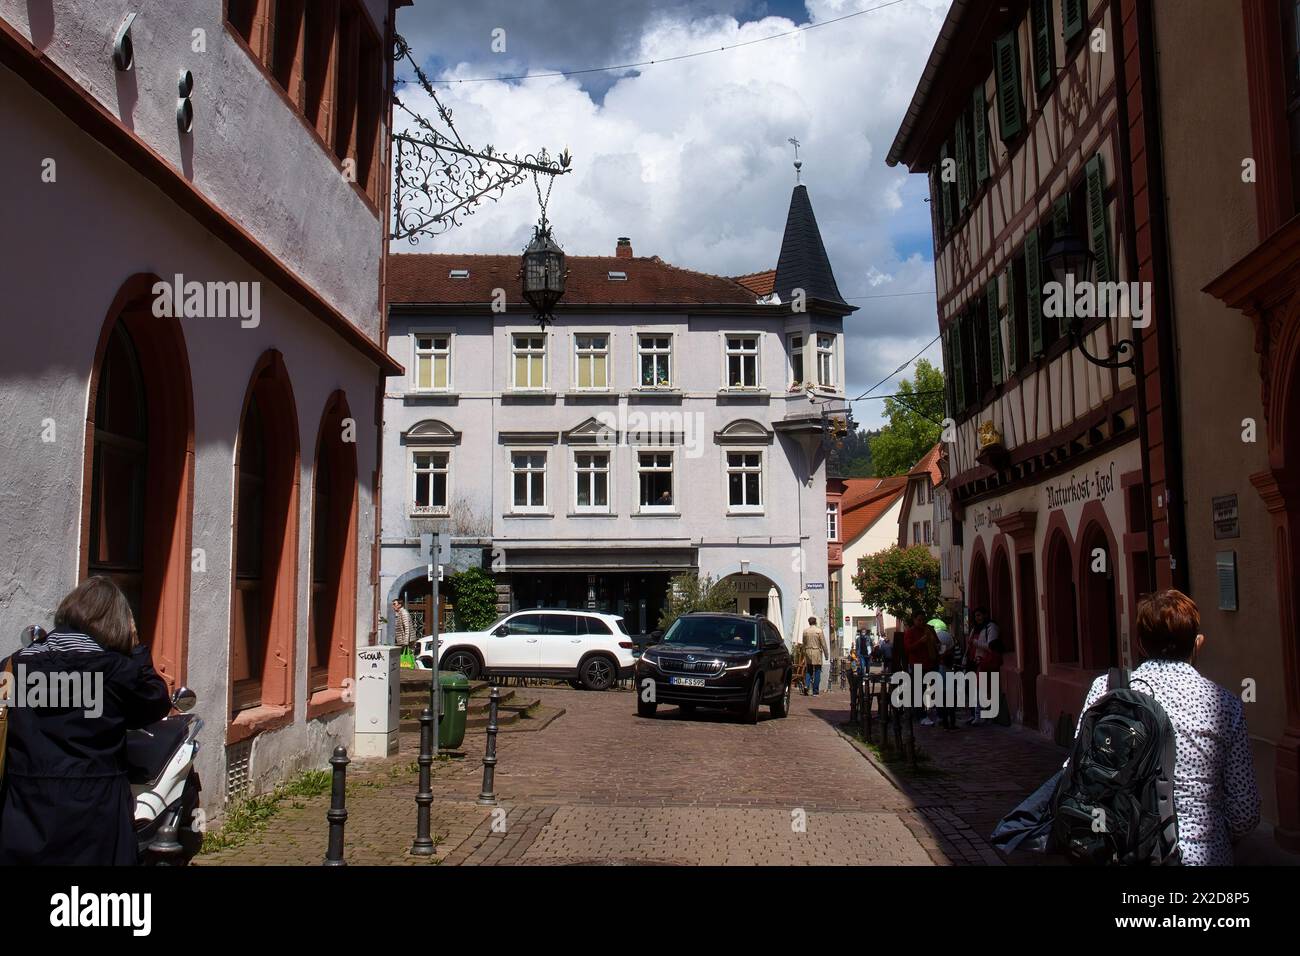 Weinheim, Allemagne - 19 mai 2021 : rue dans la vieille ville, Altstadt, de Weinheim, Allemagne. Banque D'Images